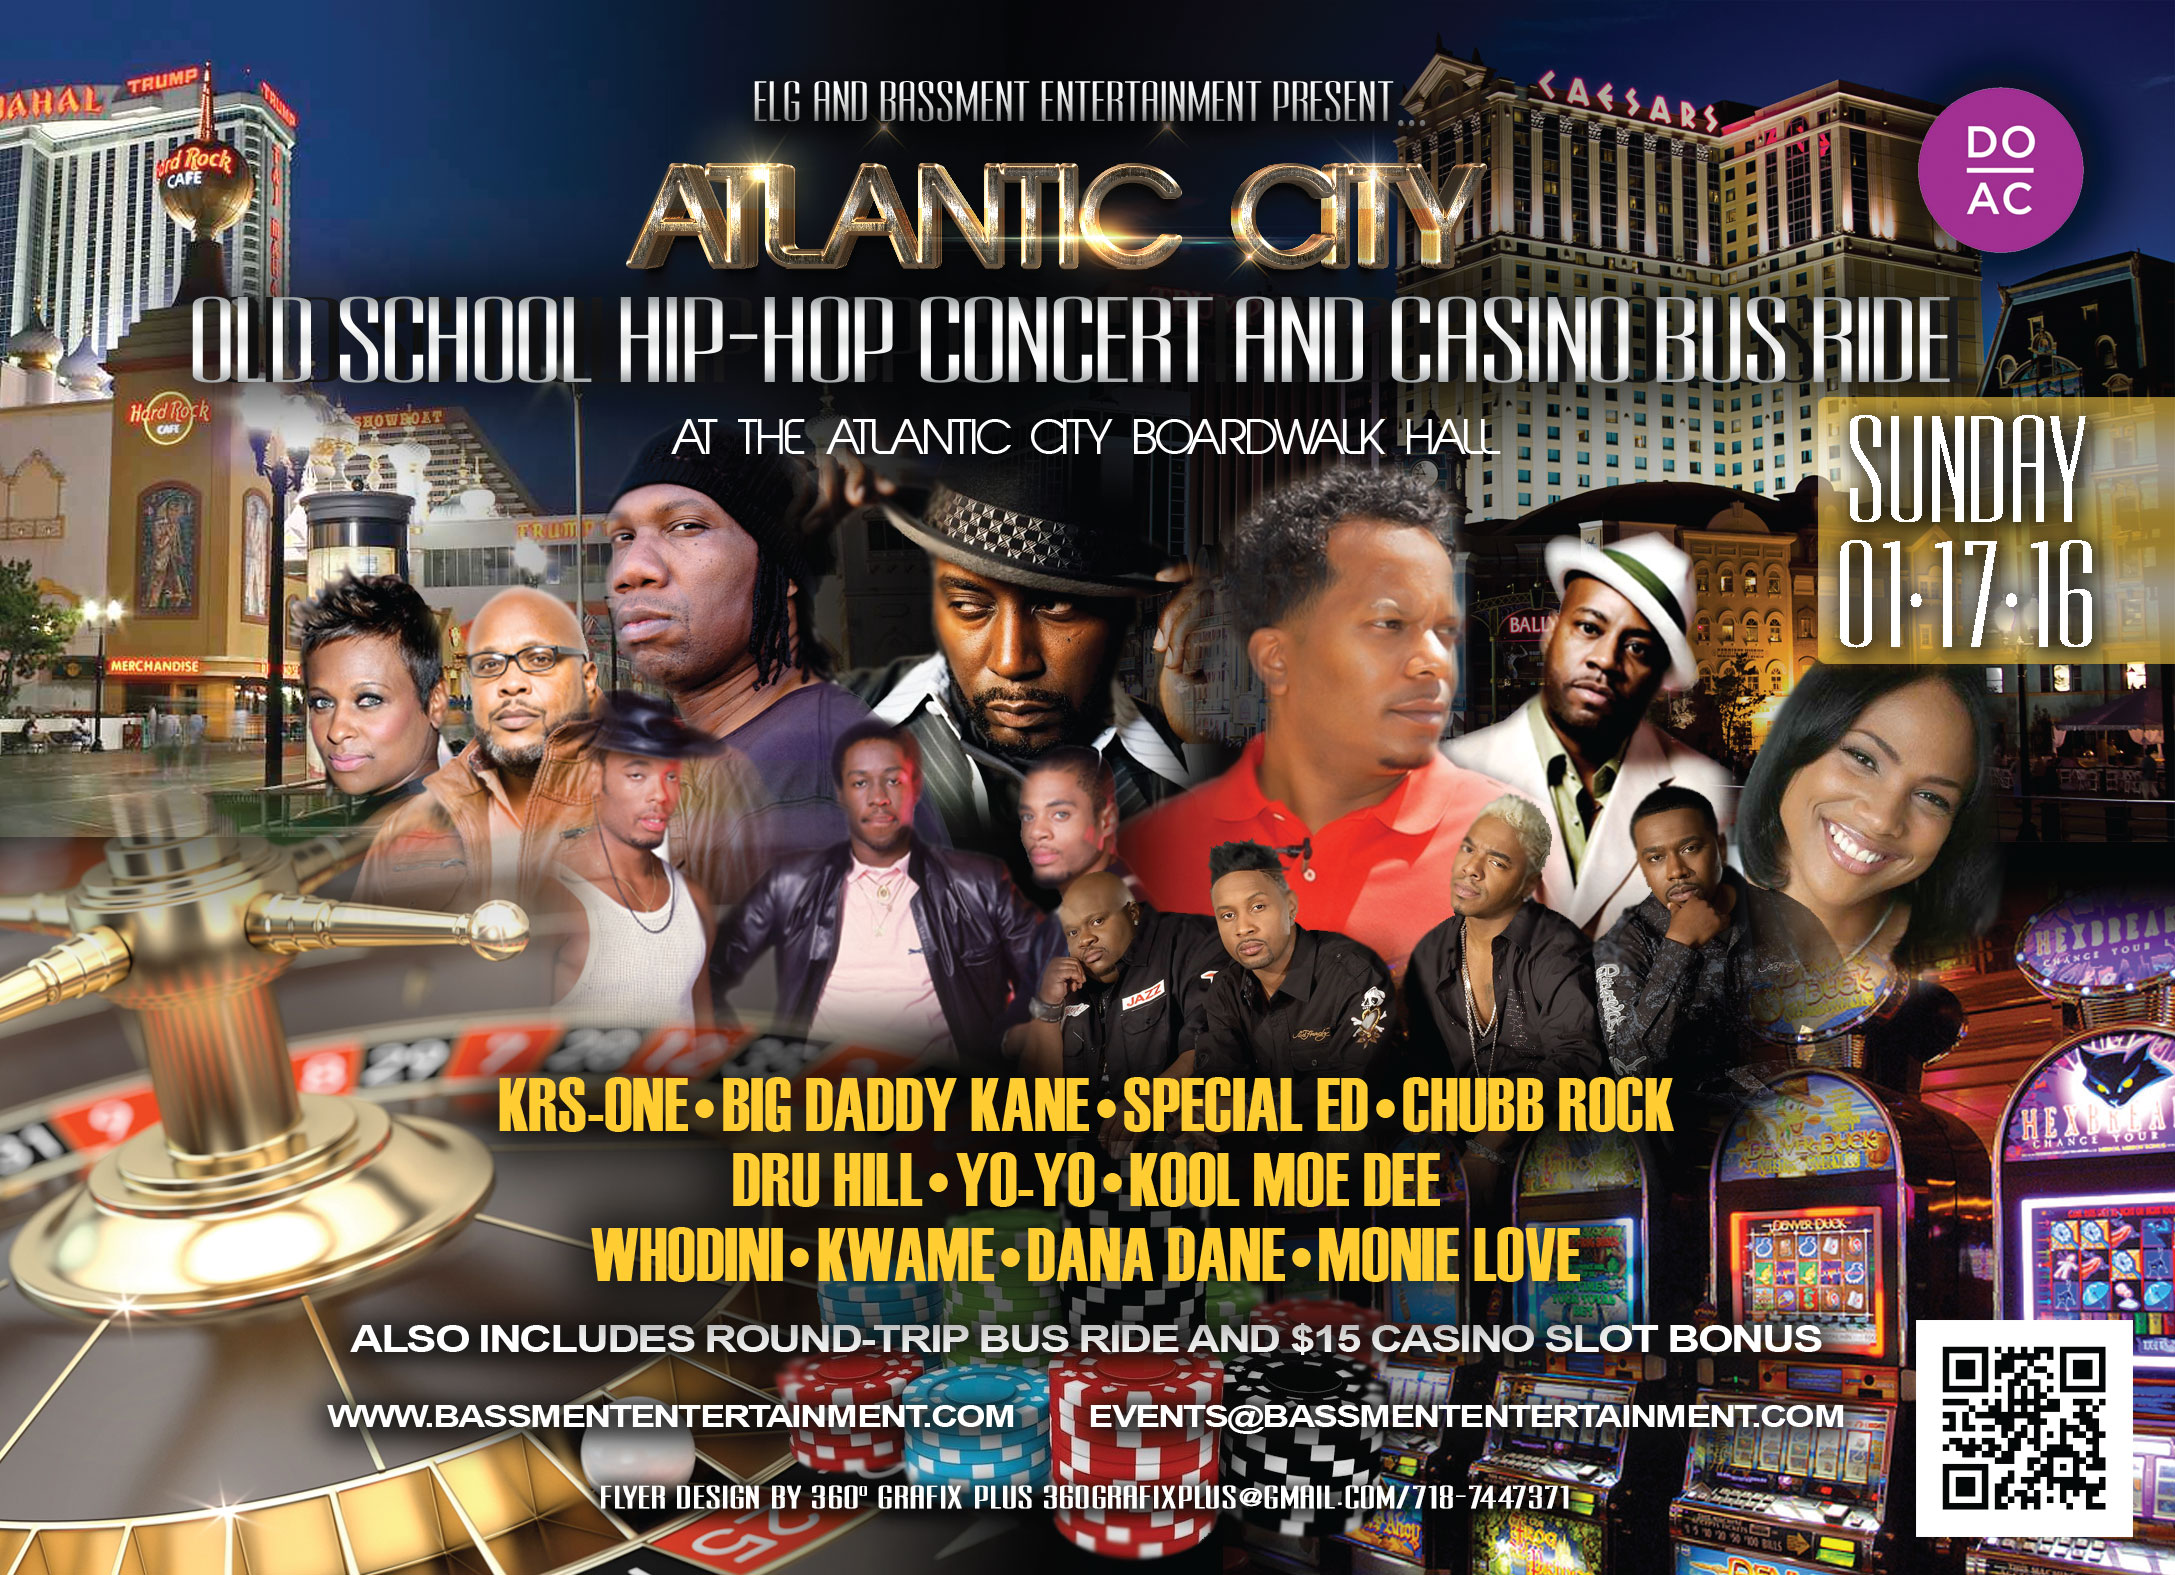 Atlantic City Old School Hip-Hop Concert and Casino Bus Ride